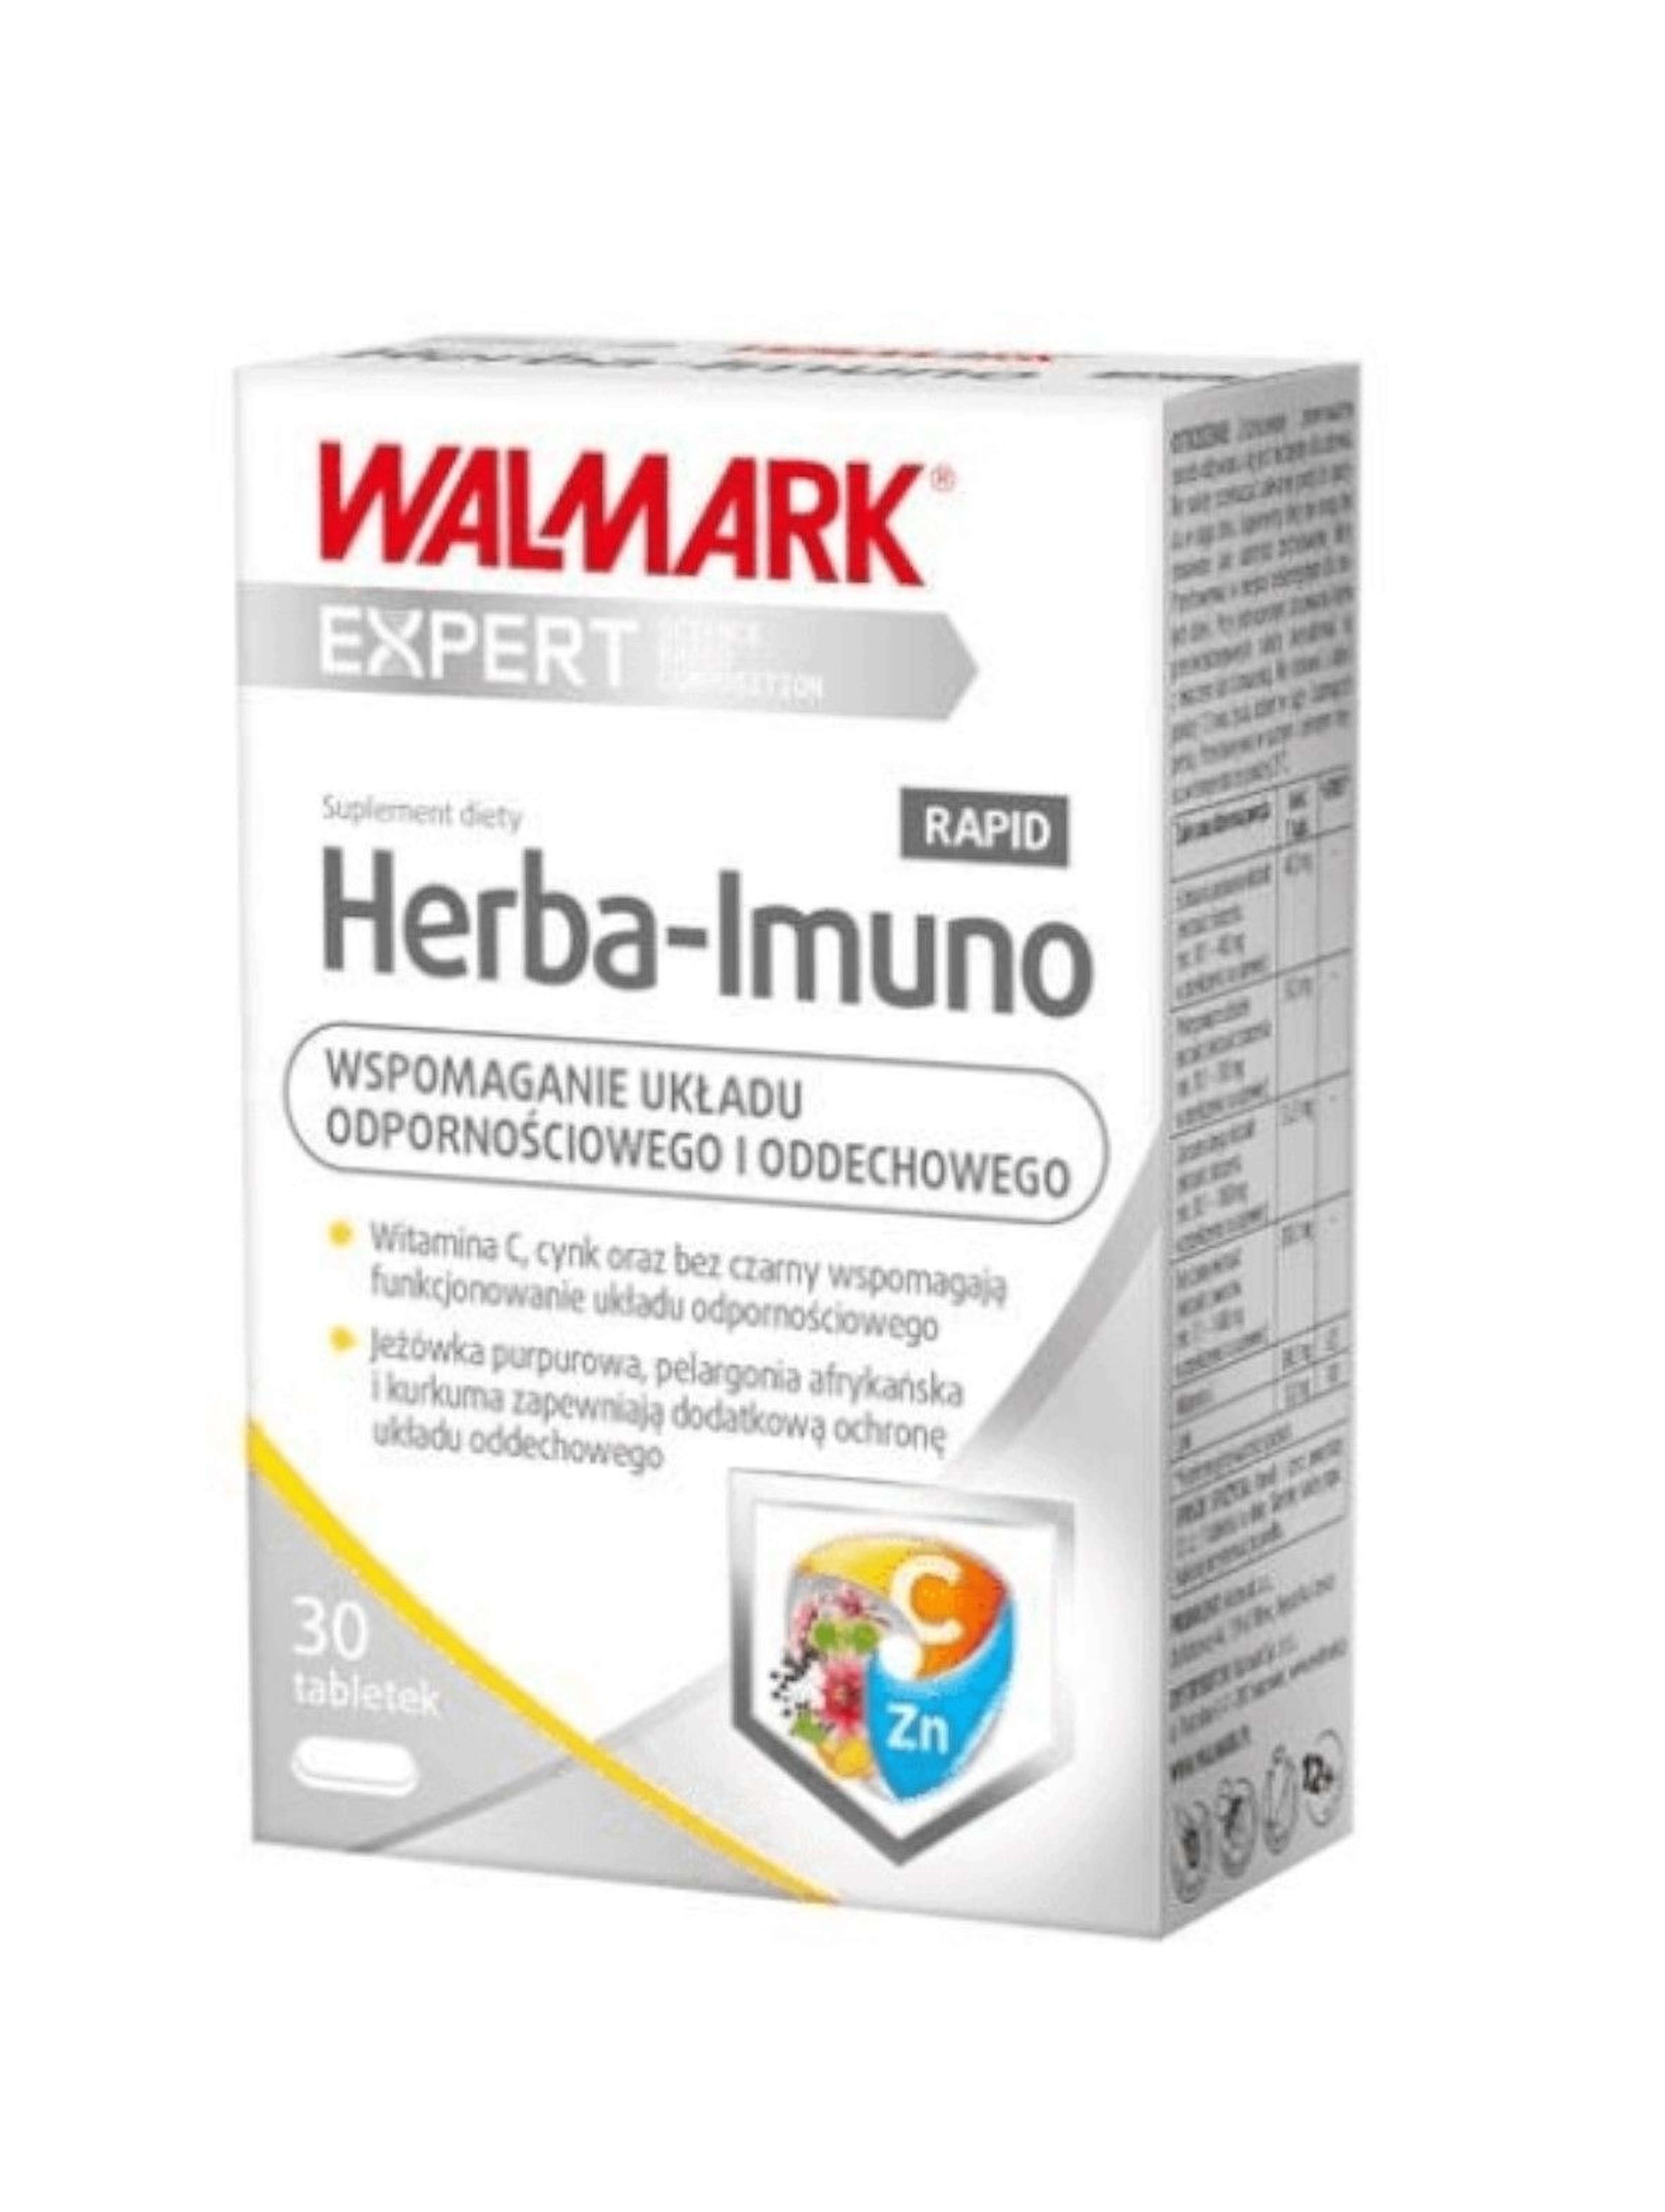 WALMARK Herba imuno rapid - 30 tabletek